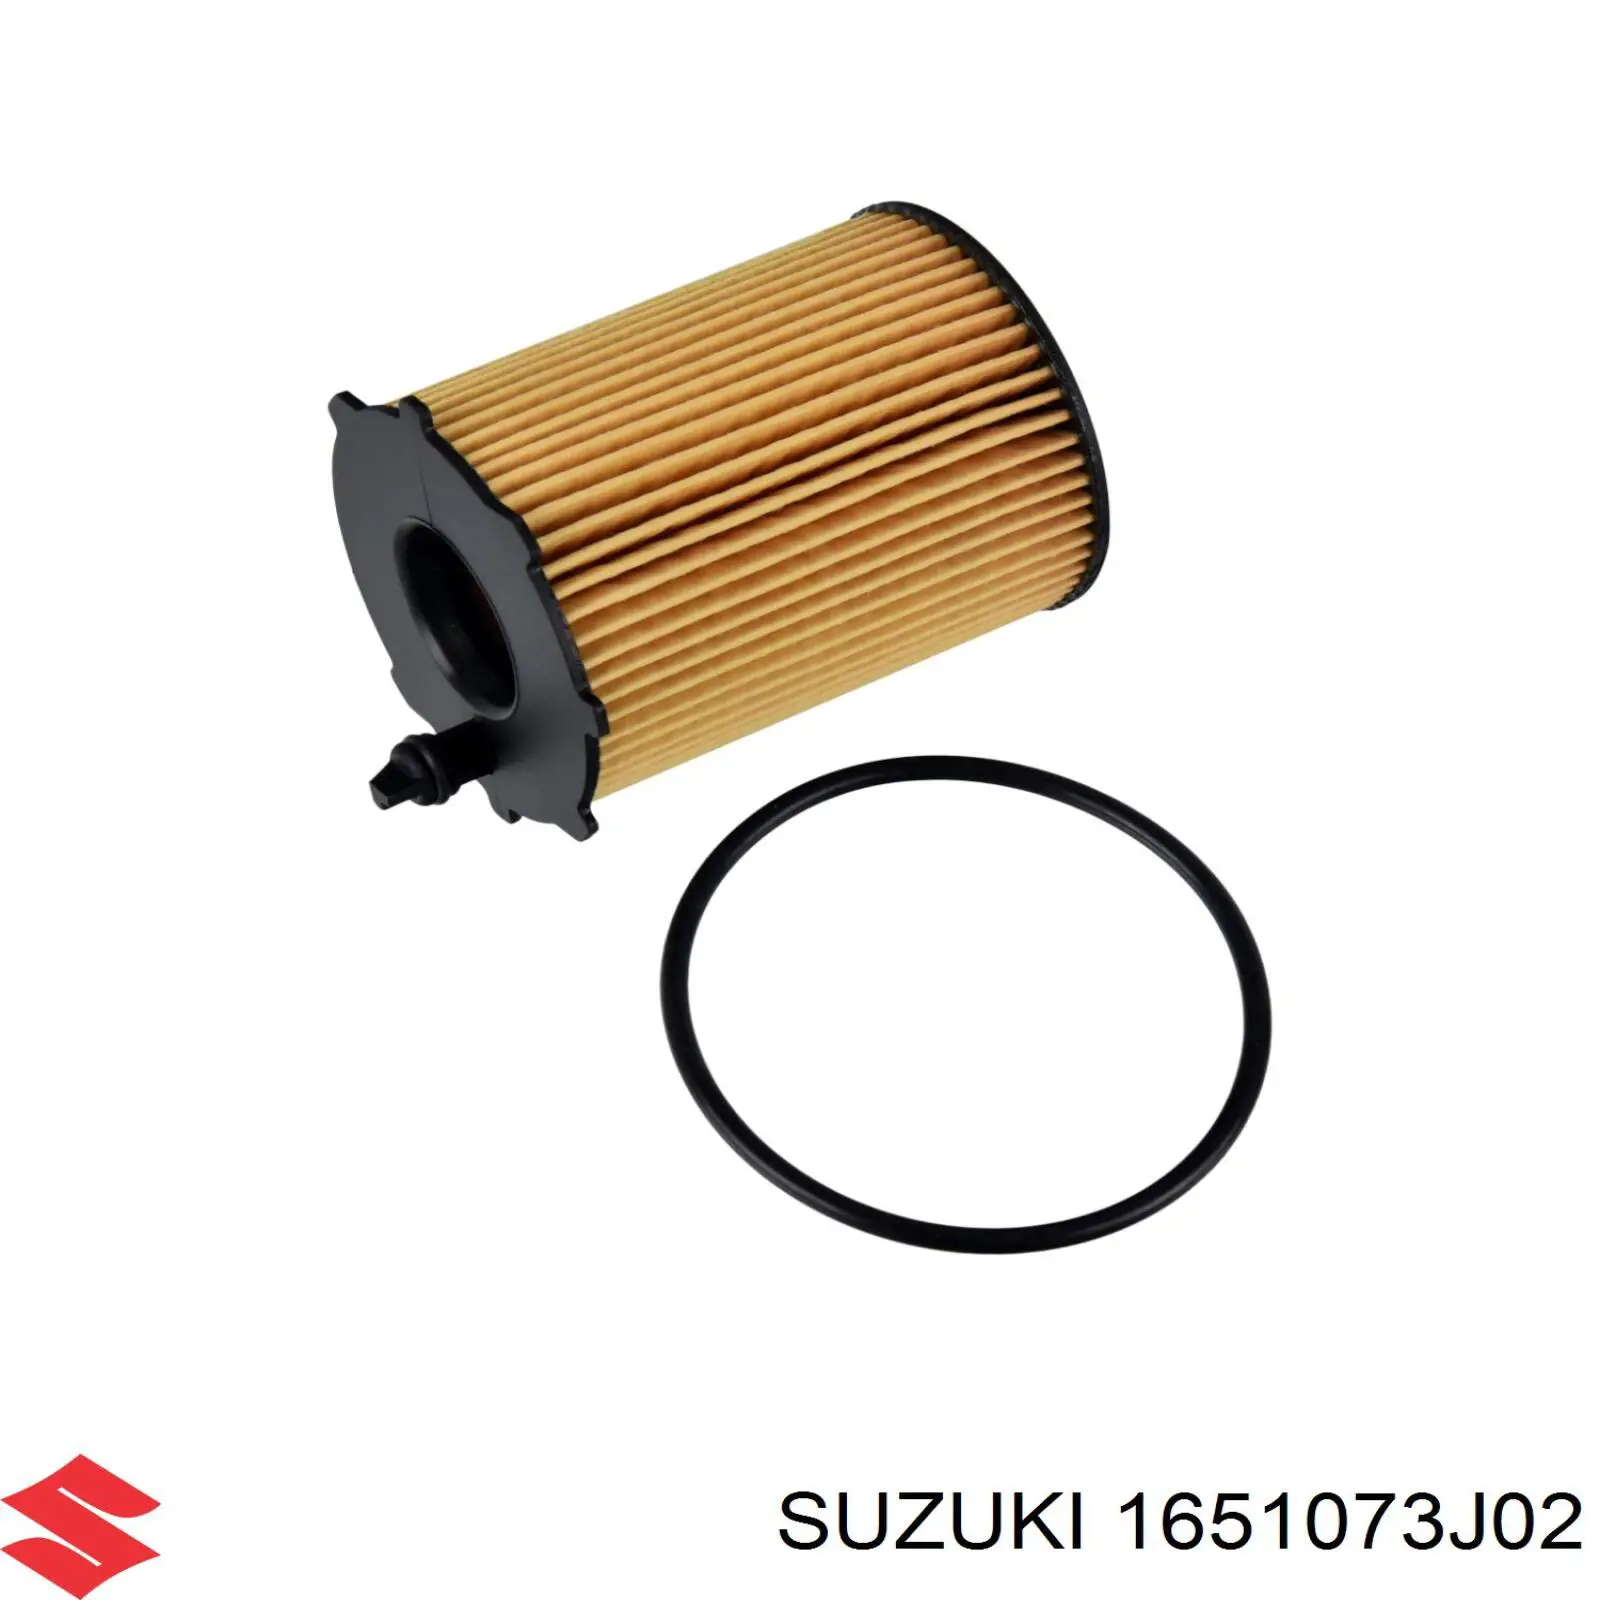 1651073J02 Suzuki filtro de aceite